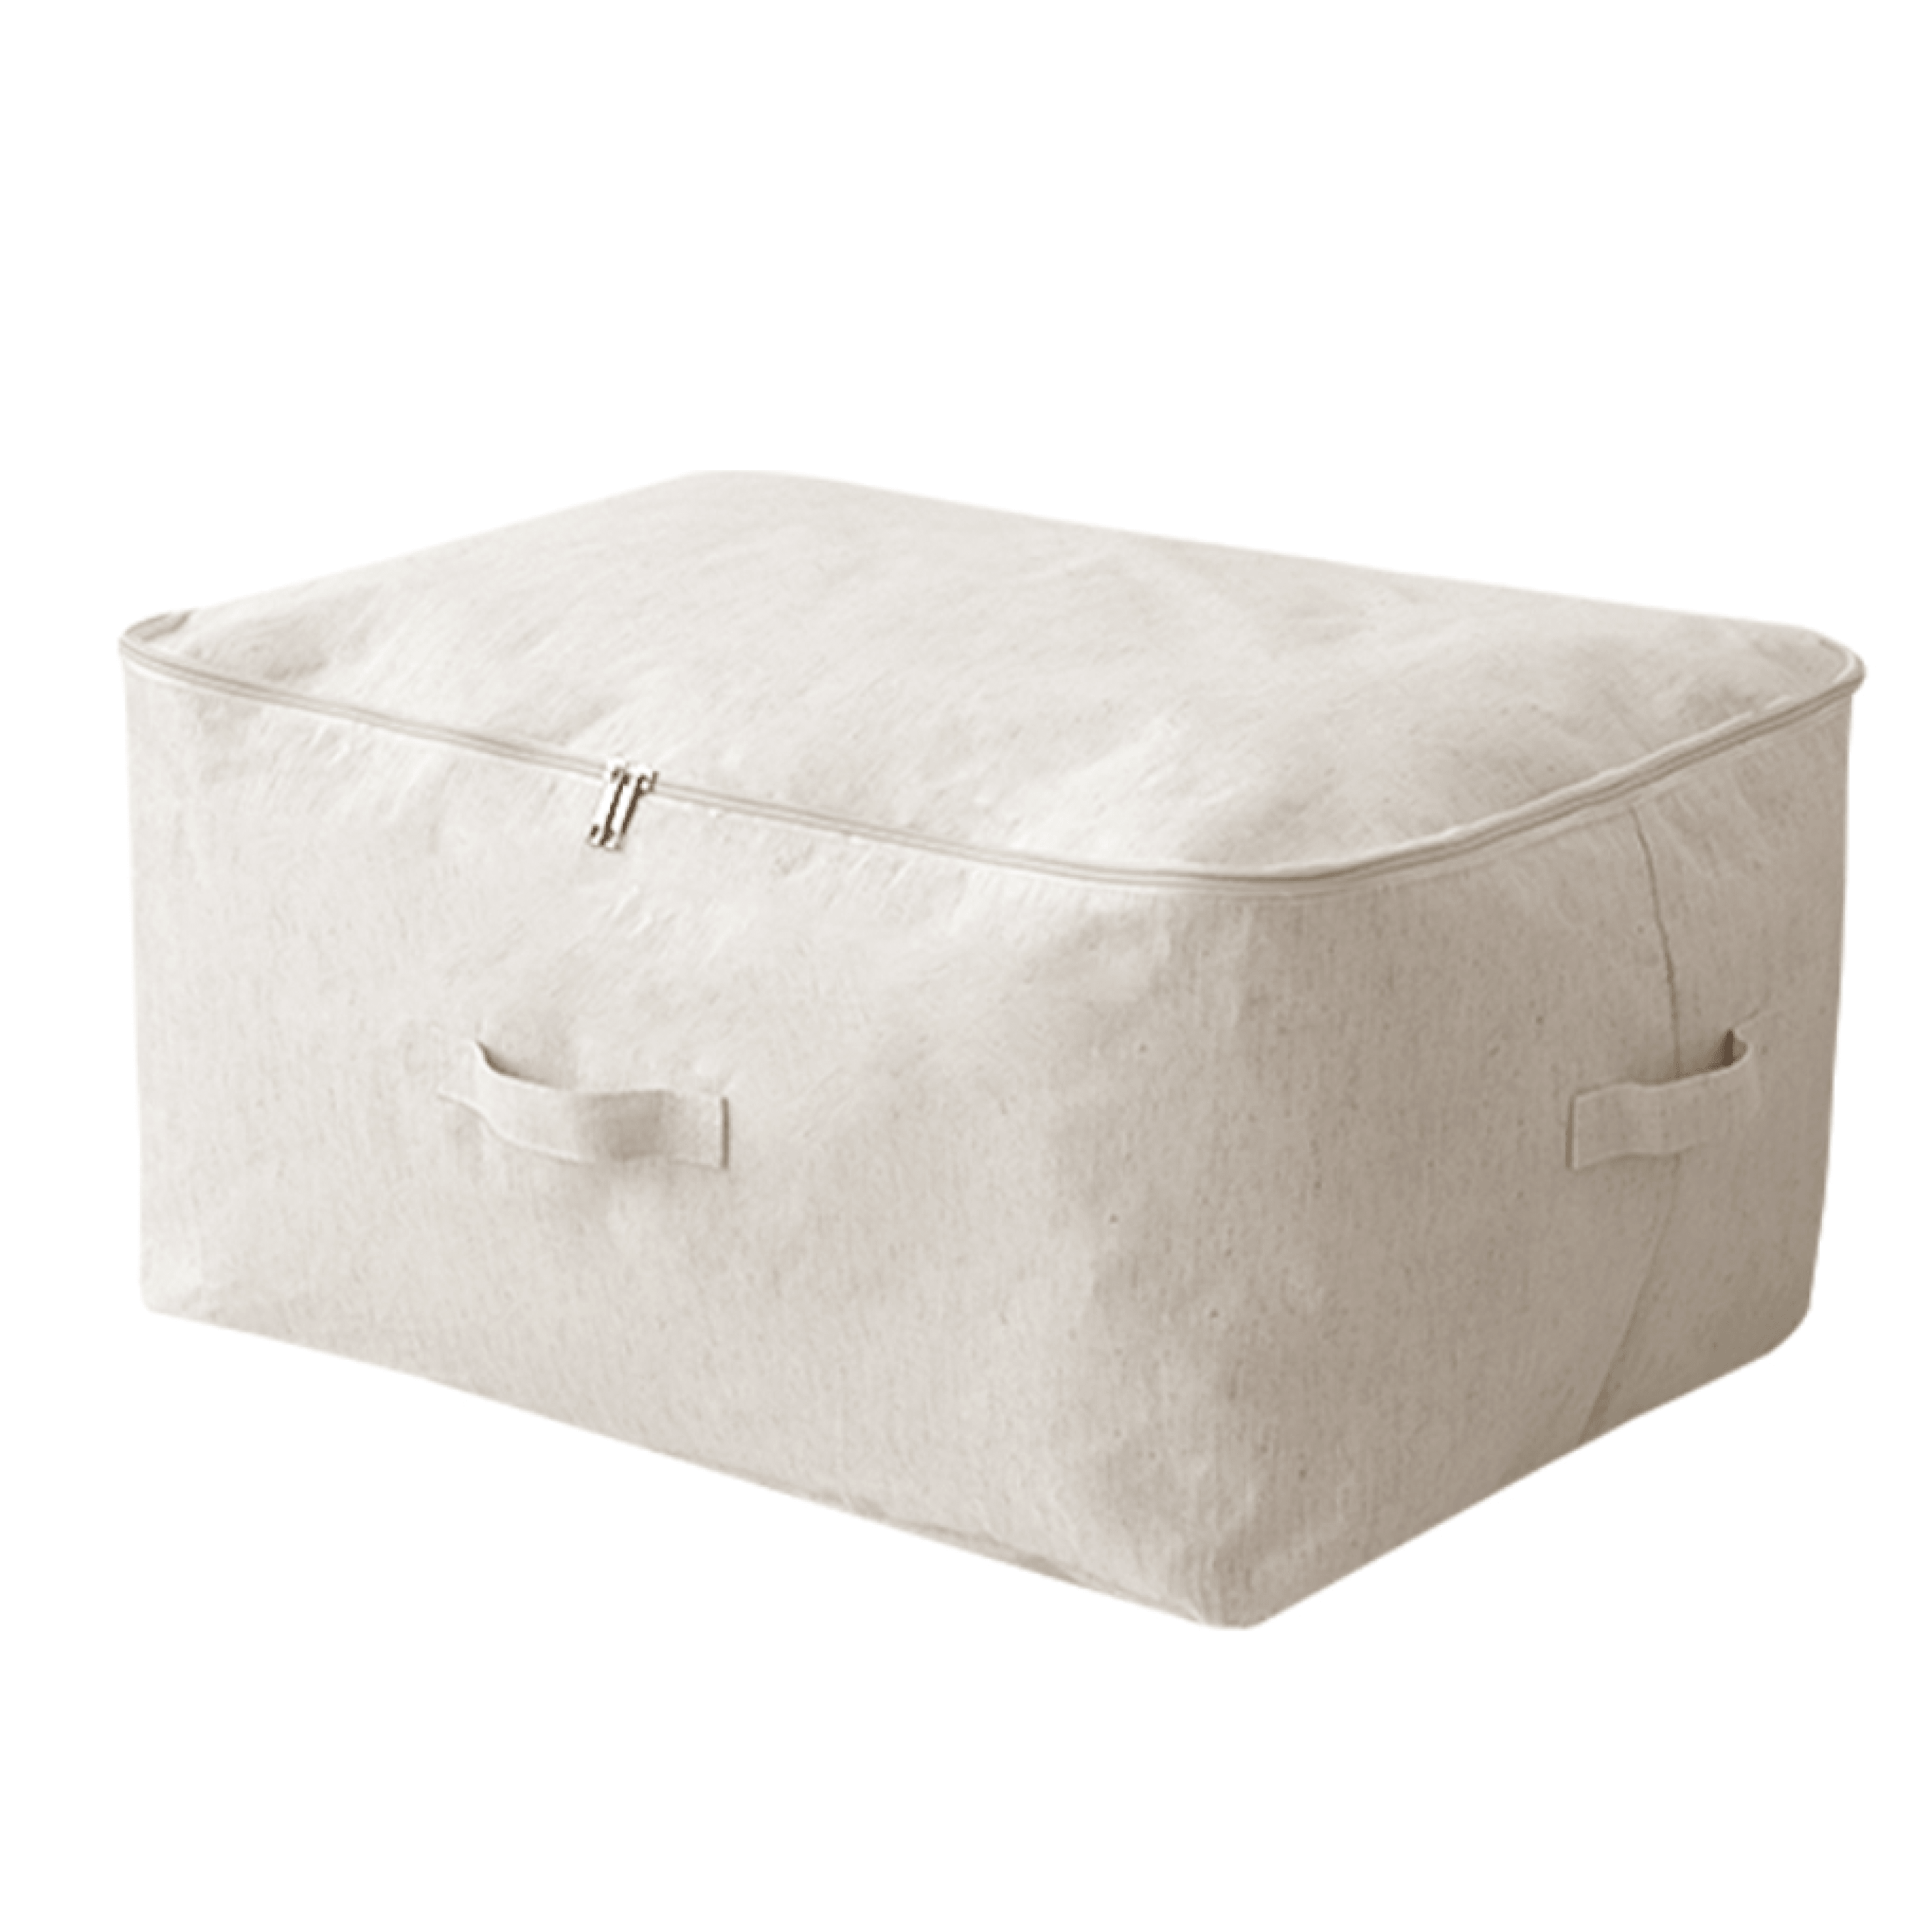 Linen Cotton Storage Bag, Canvas Storage Bag with Handles, Bag